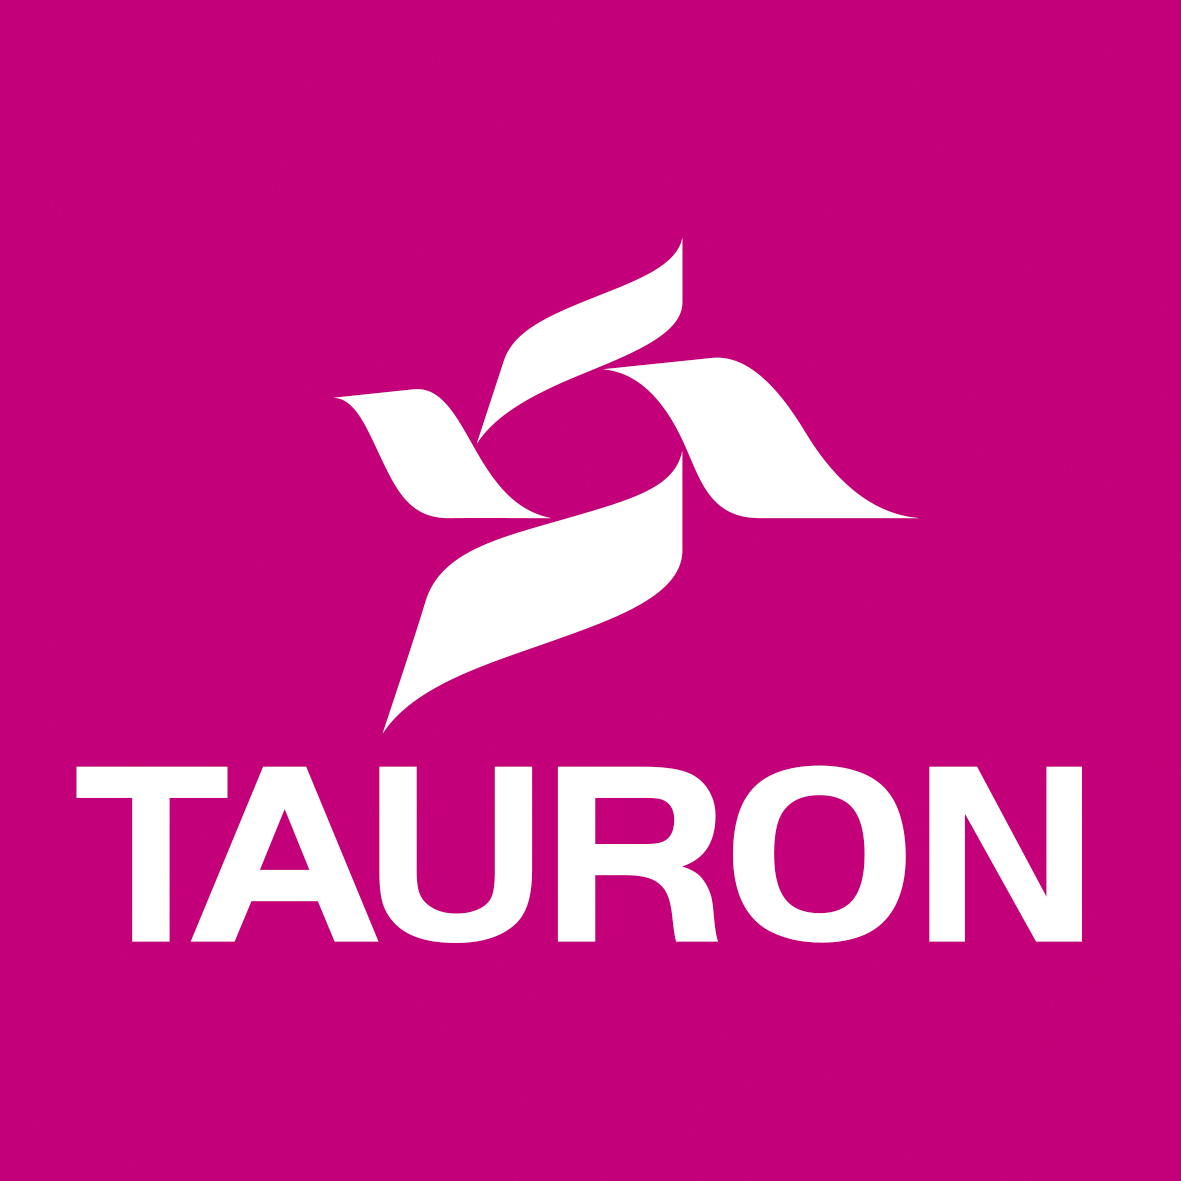 tauron_logo_promocyjne_pionowe.jpg (170 KB)